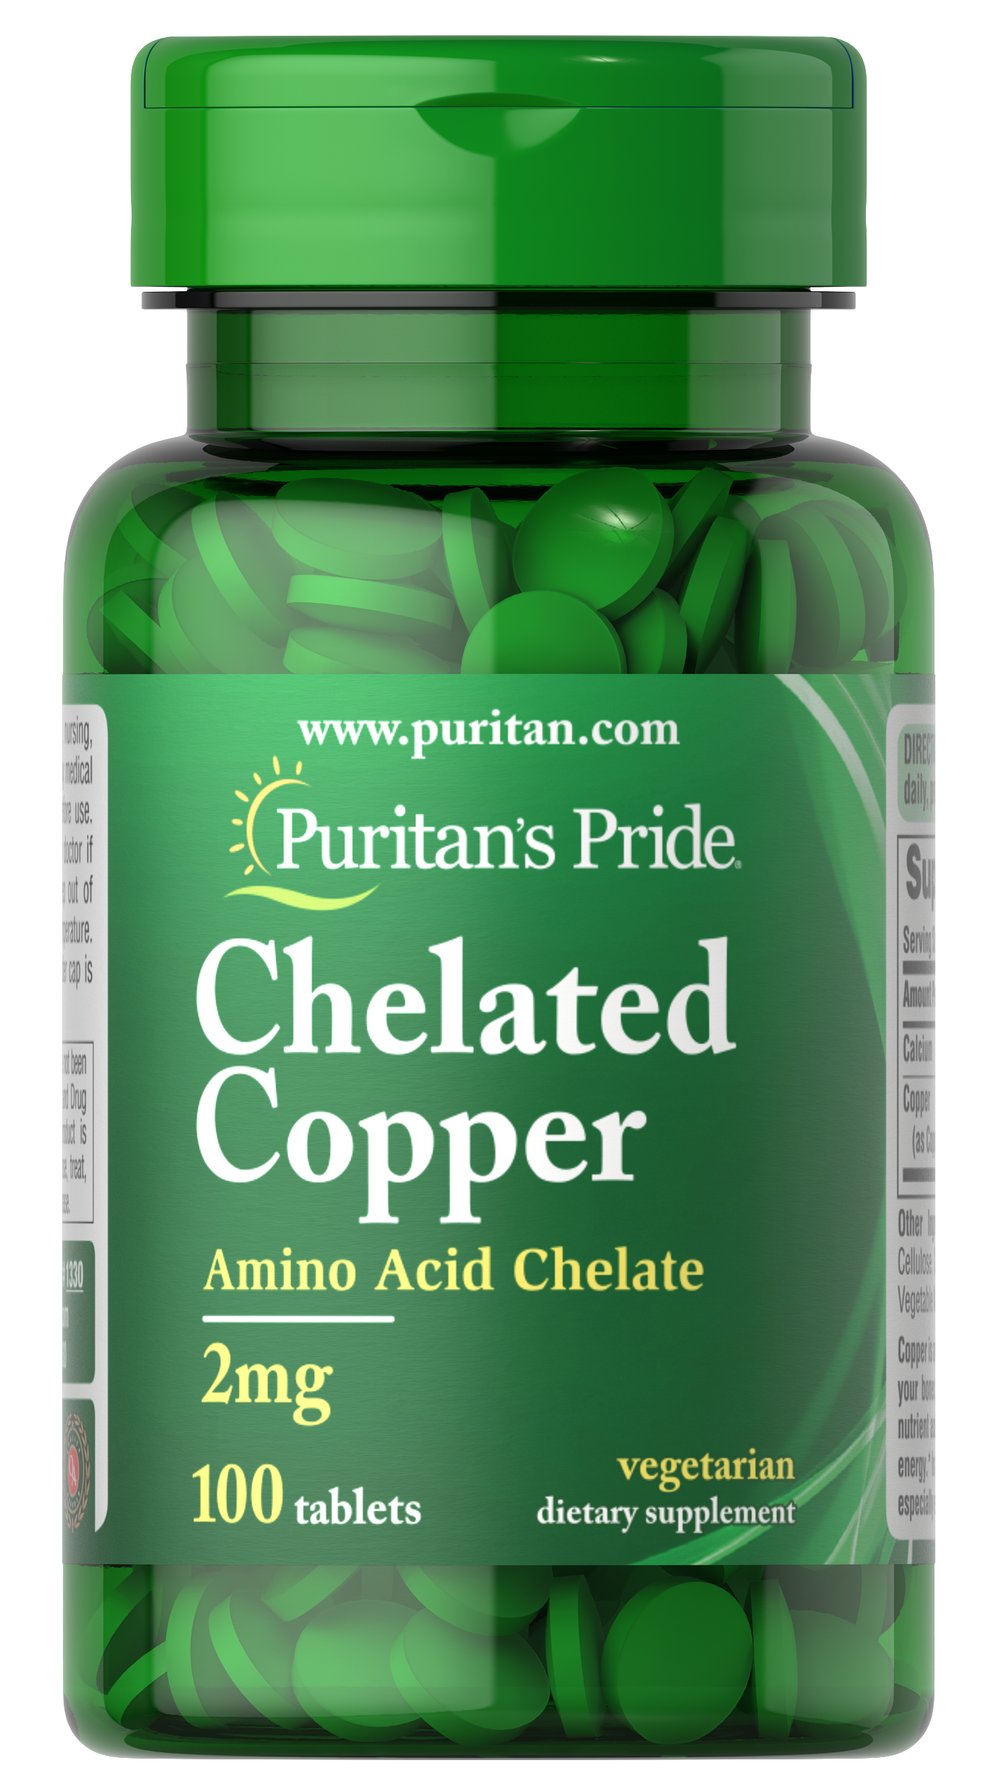 Puritan's Pride, Chelated Copper, Медь в Хелатной форме 2 мг - 100 таблеток